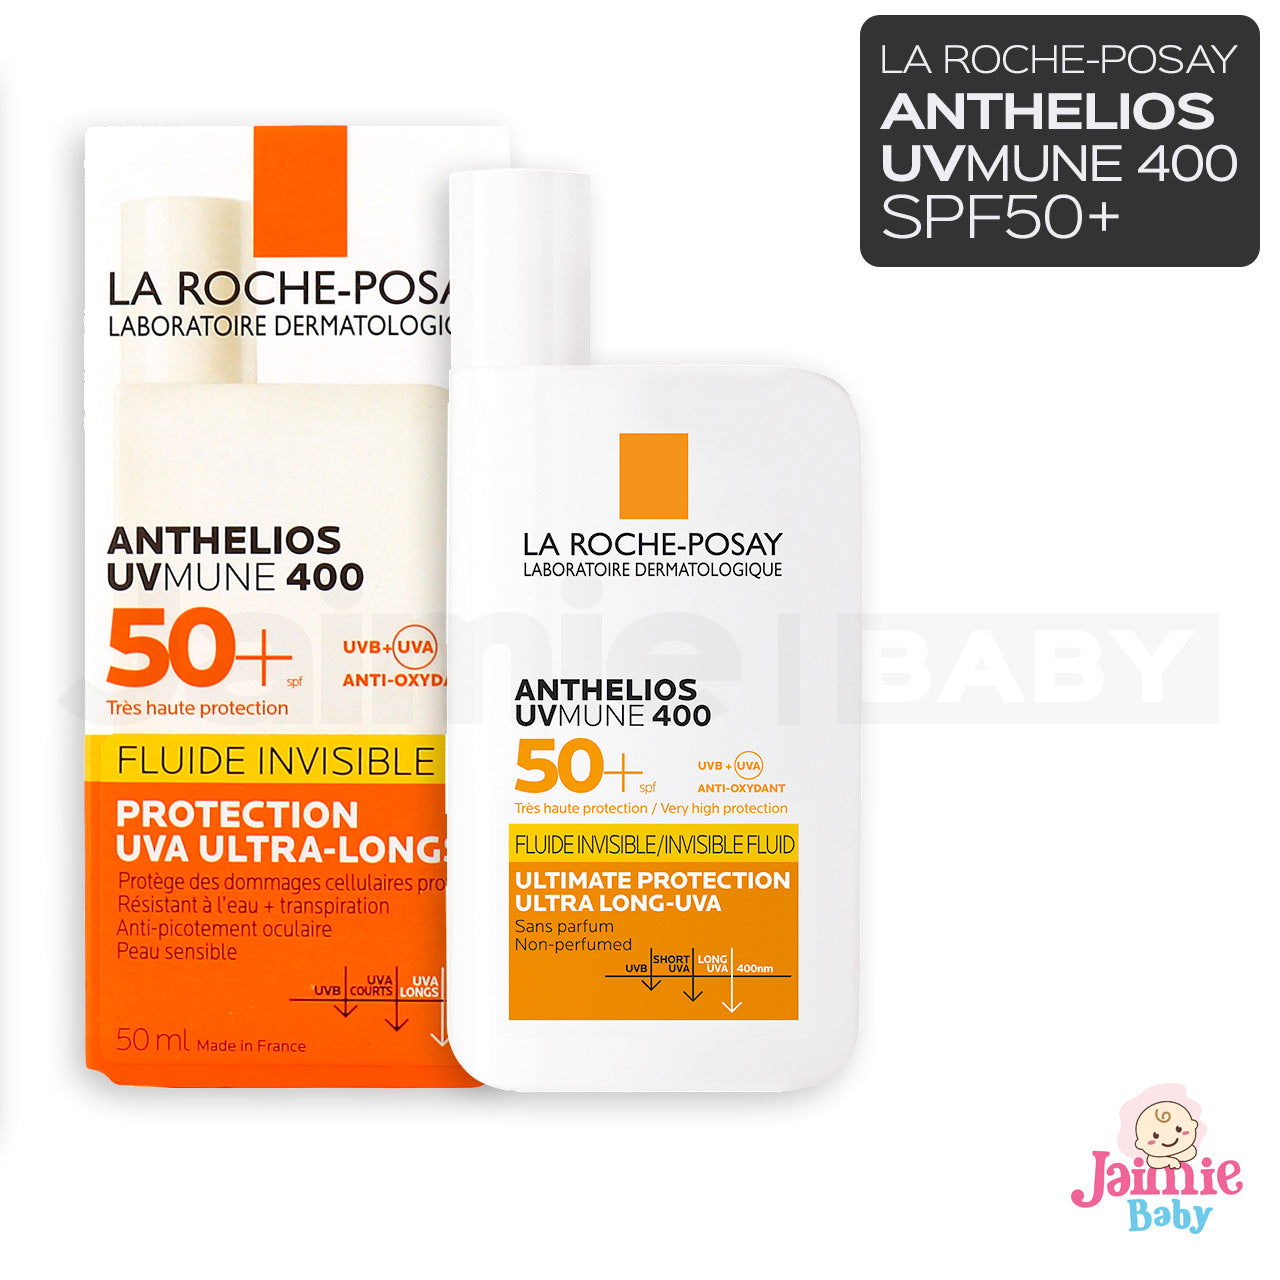 Anthelios UV Mune 400 SPG50+ sunscreen